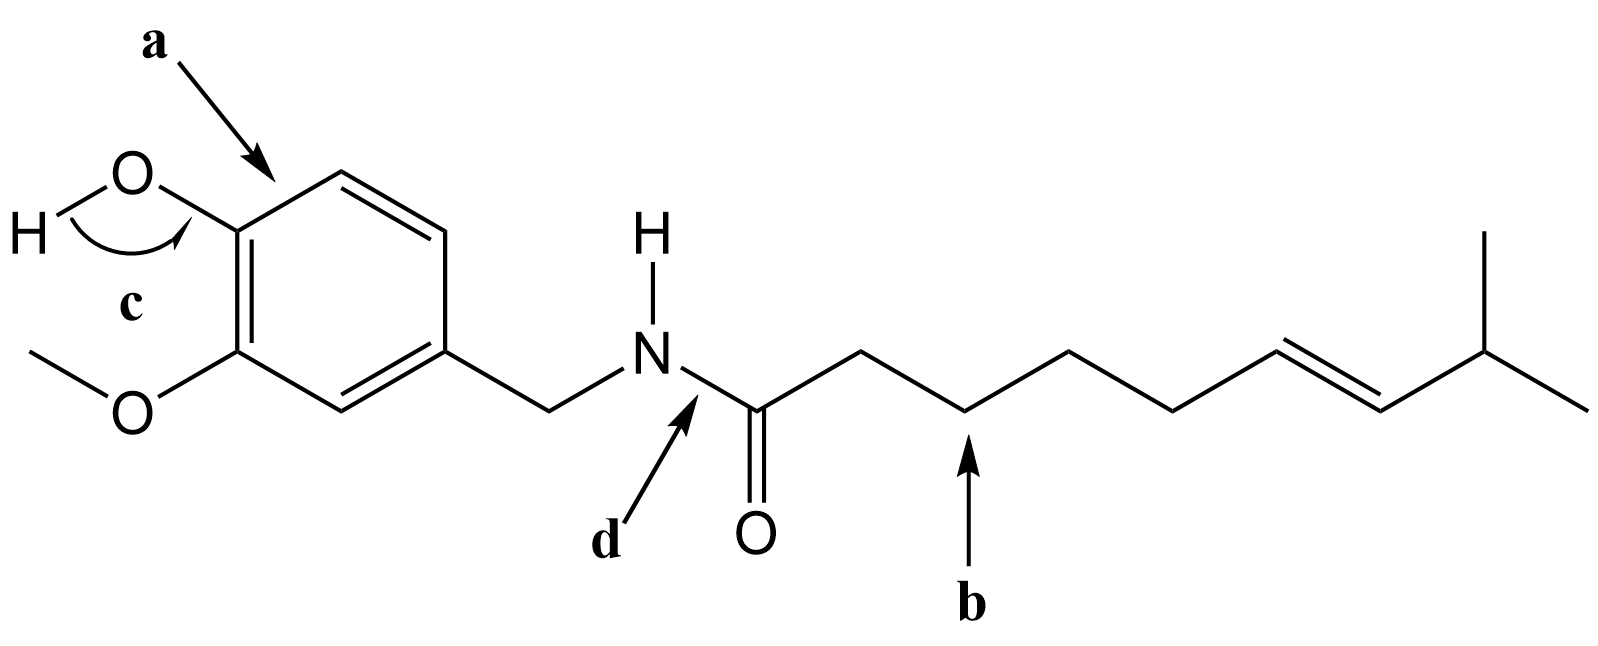 Capsaicin molecule (8-methyl-N-vanillyl-6-nonenamide).